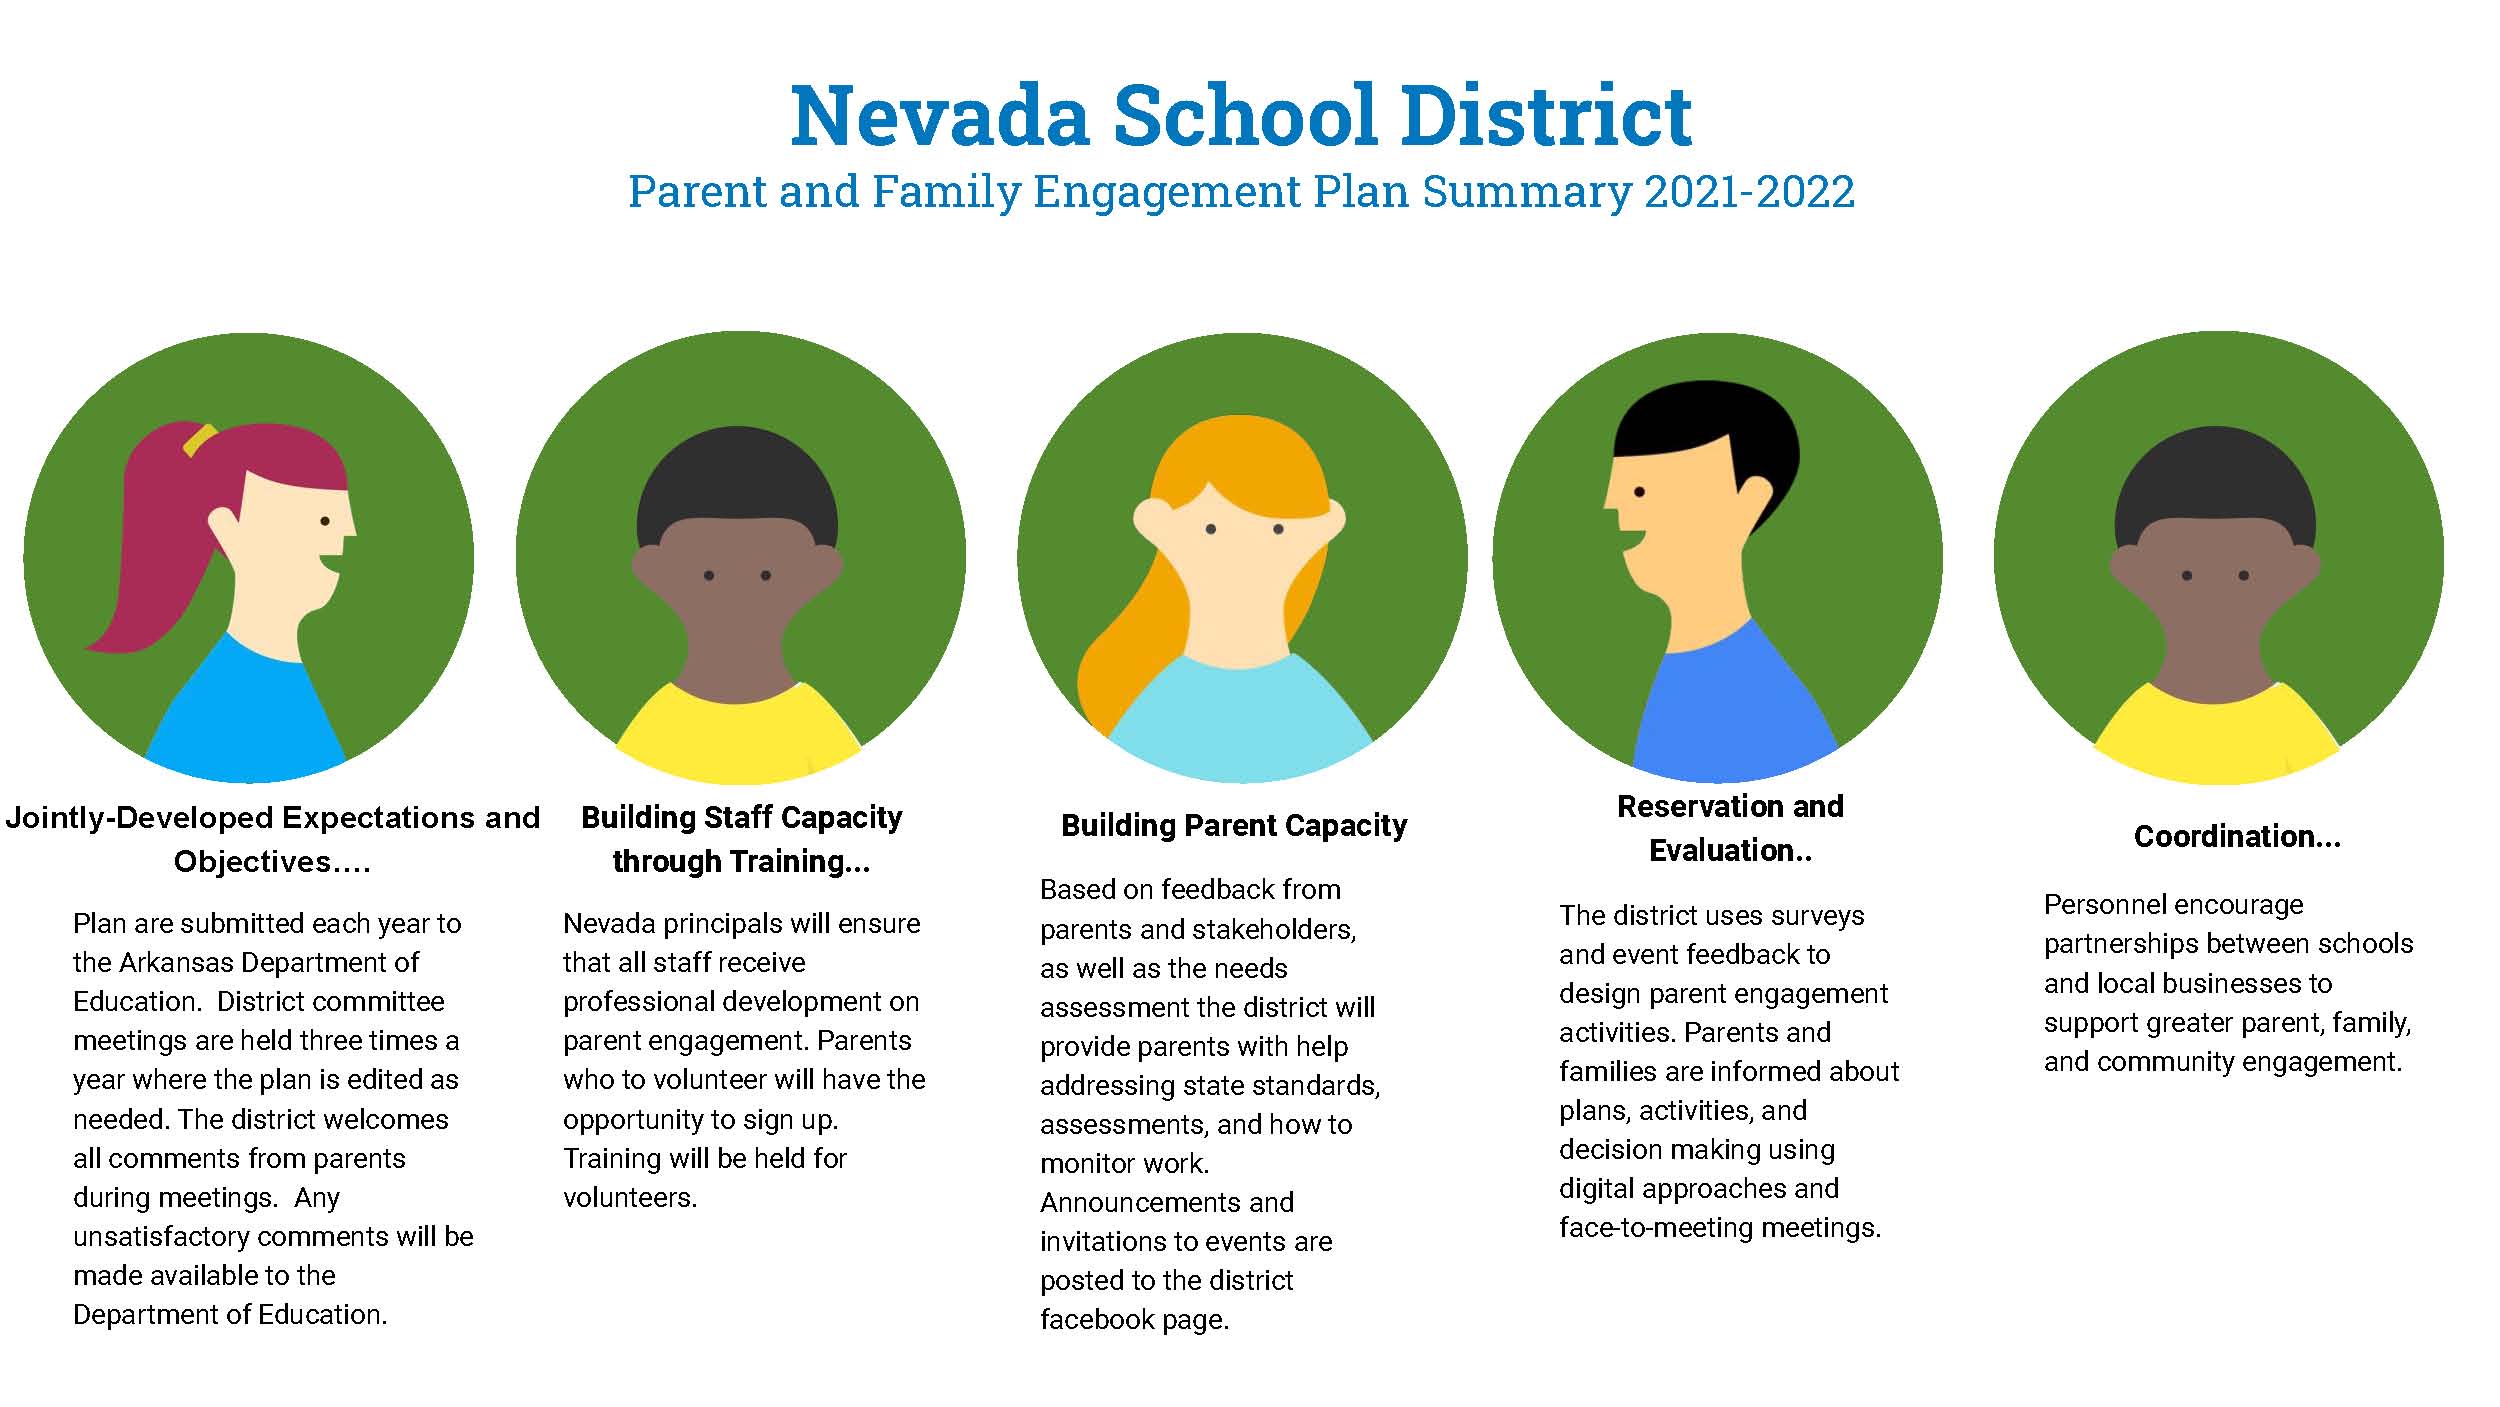 nevada school district summary of engagement plan 21-22 graphic